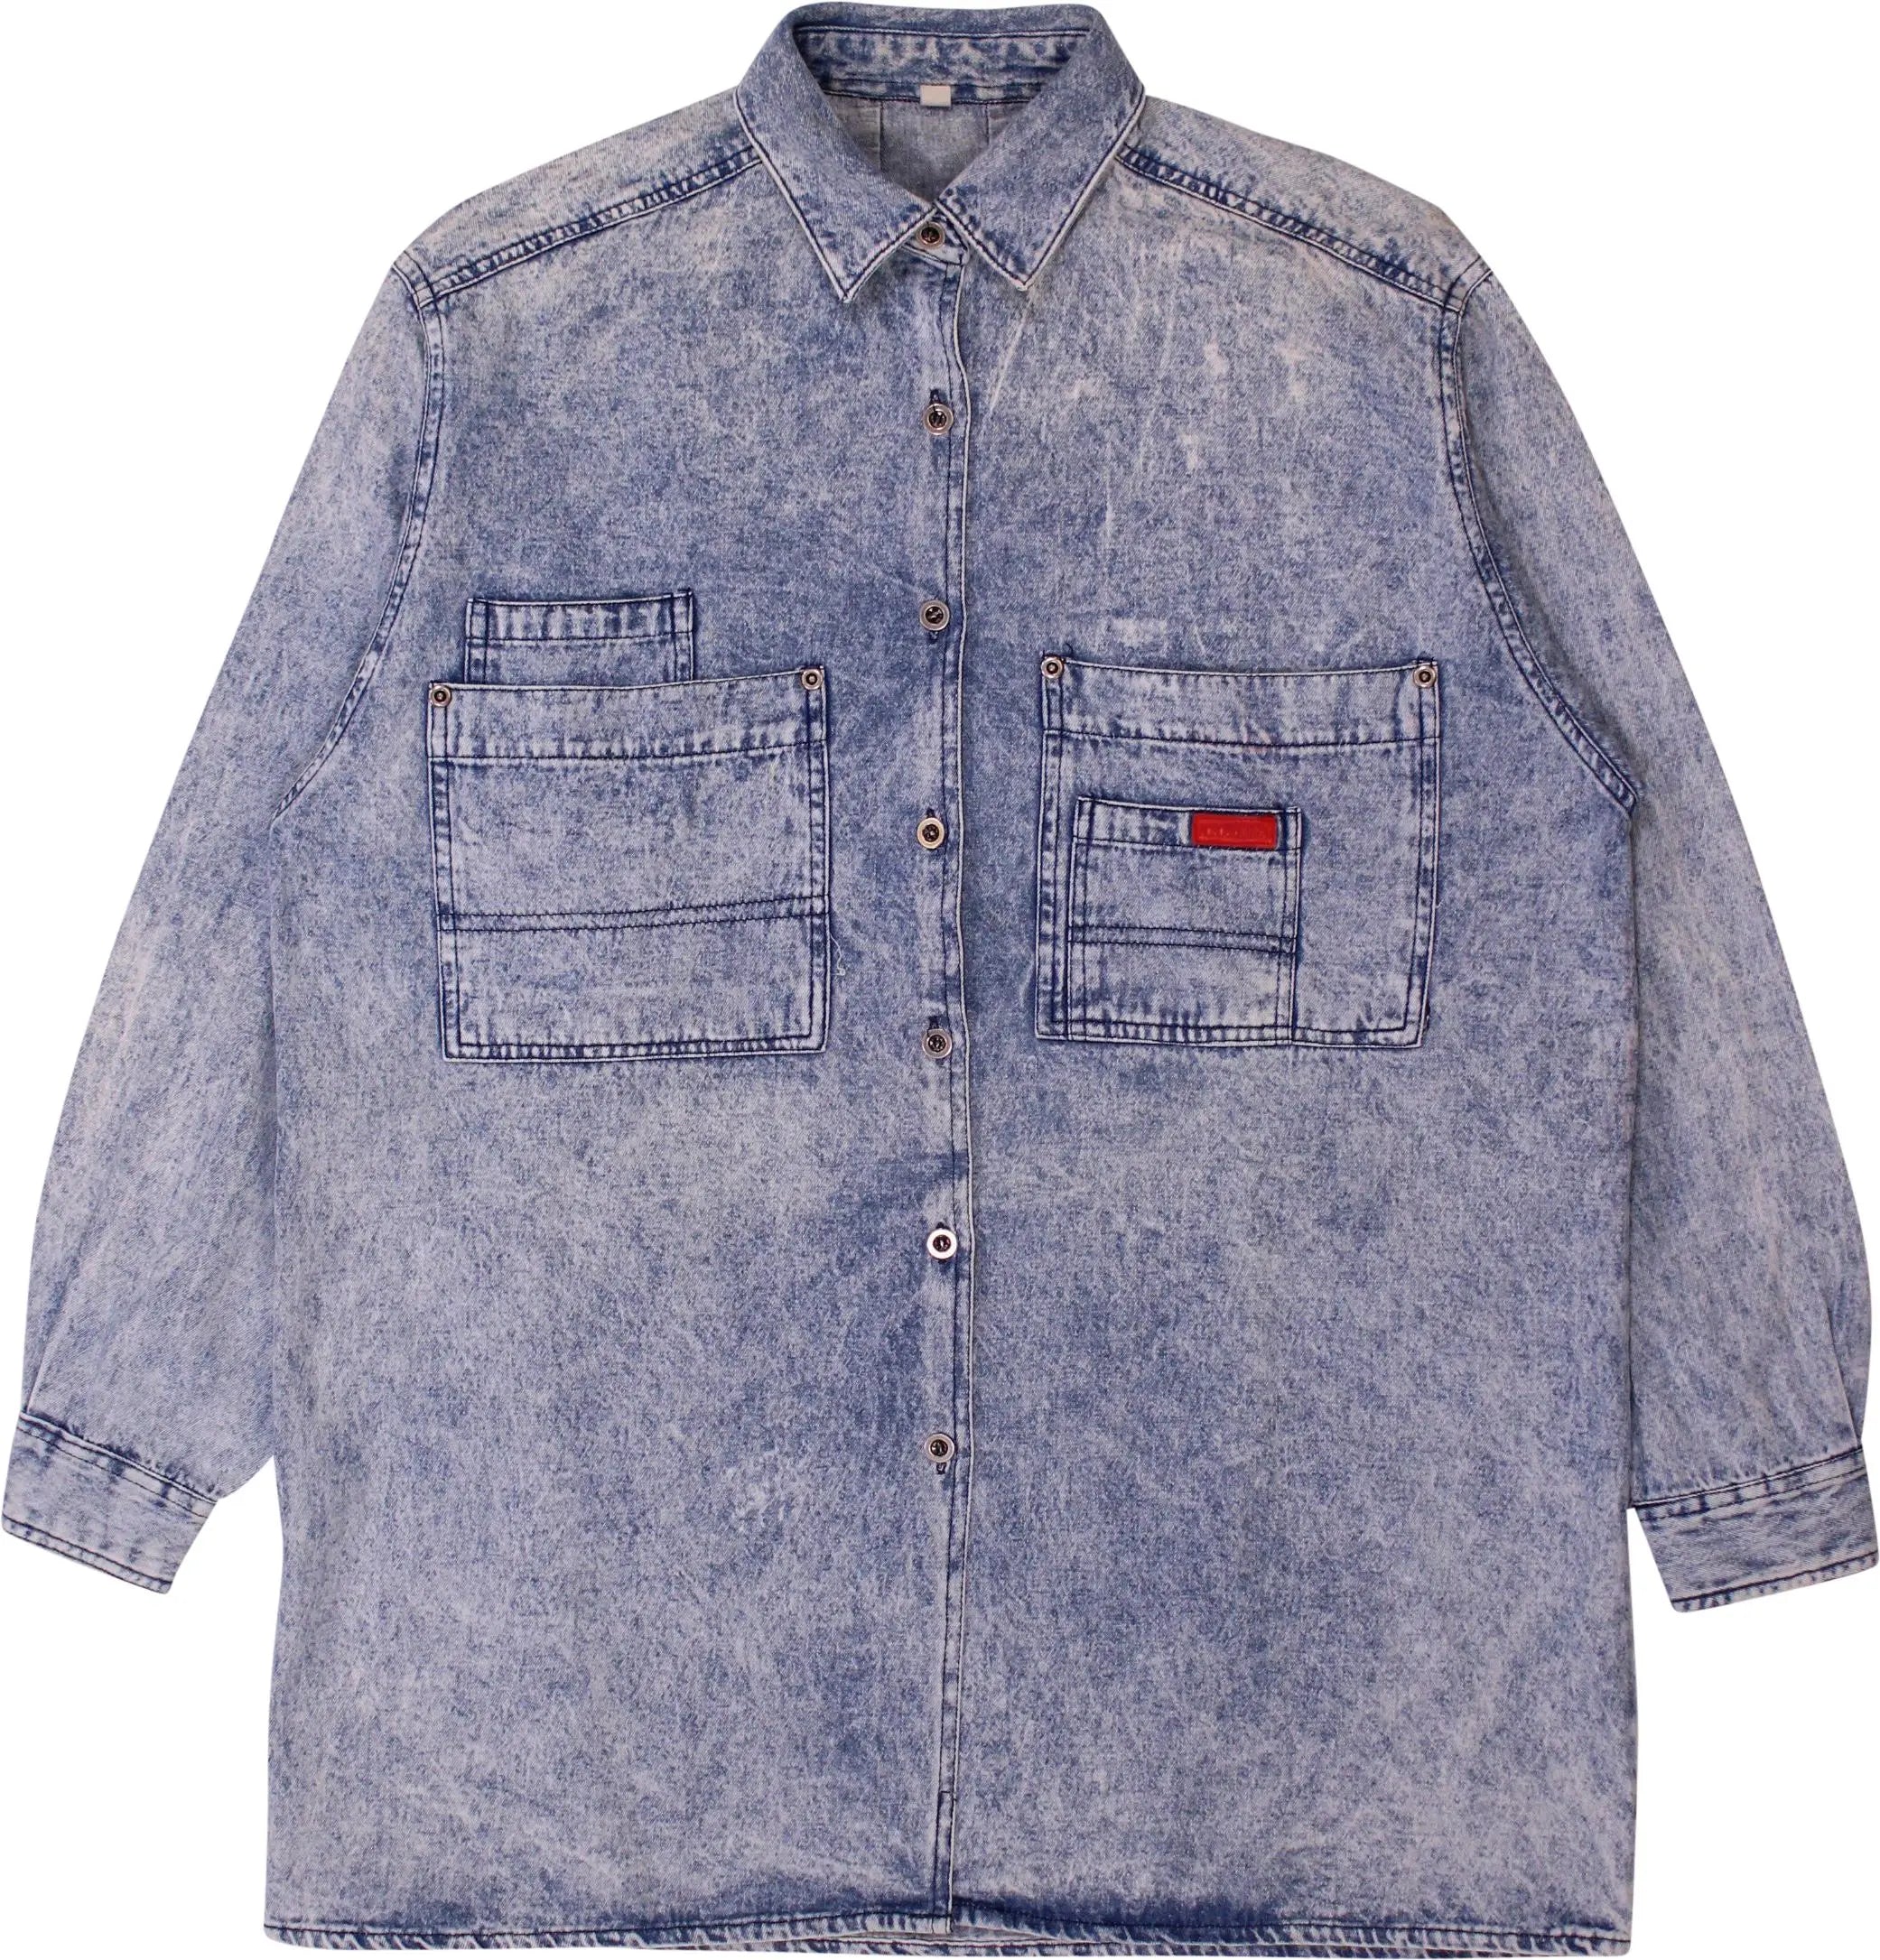 Arizona - Denim Shirt- ThriftTale.com - Vintage and second handclothing